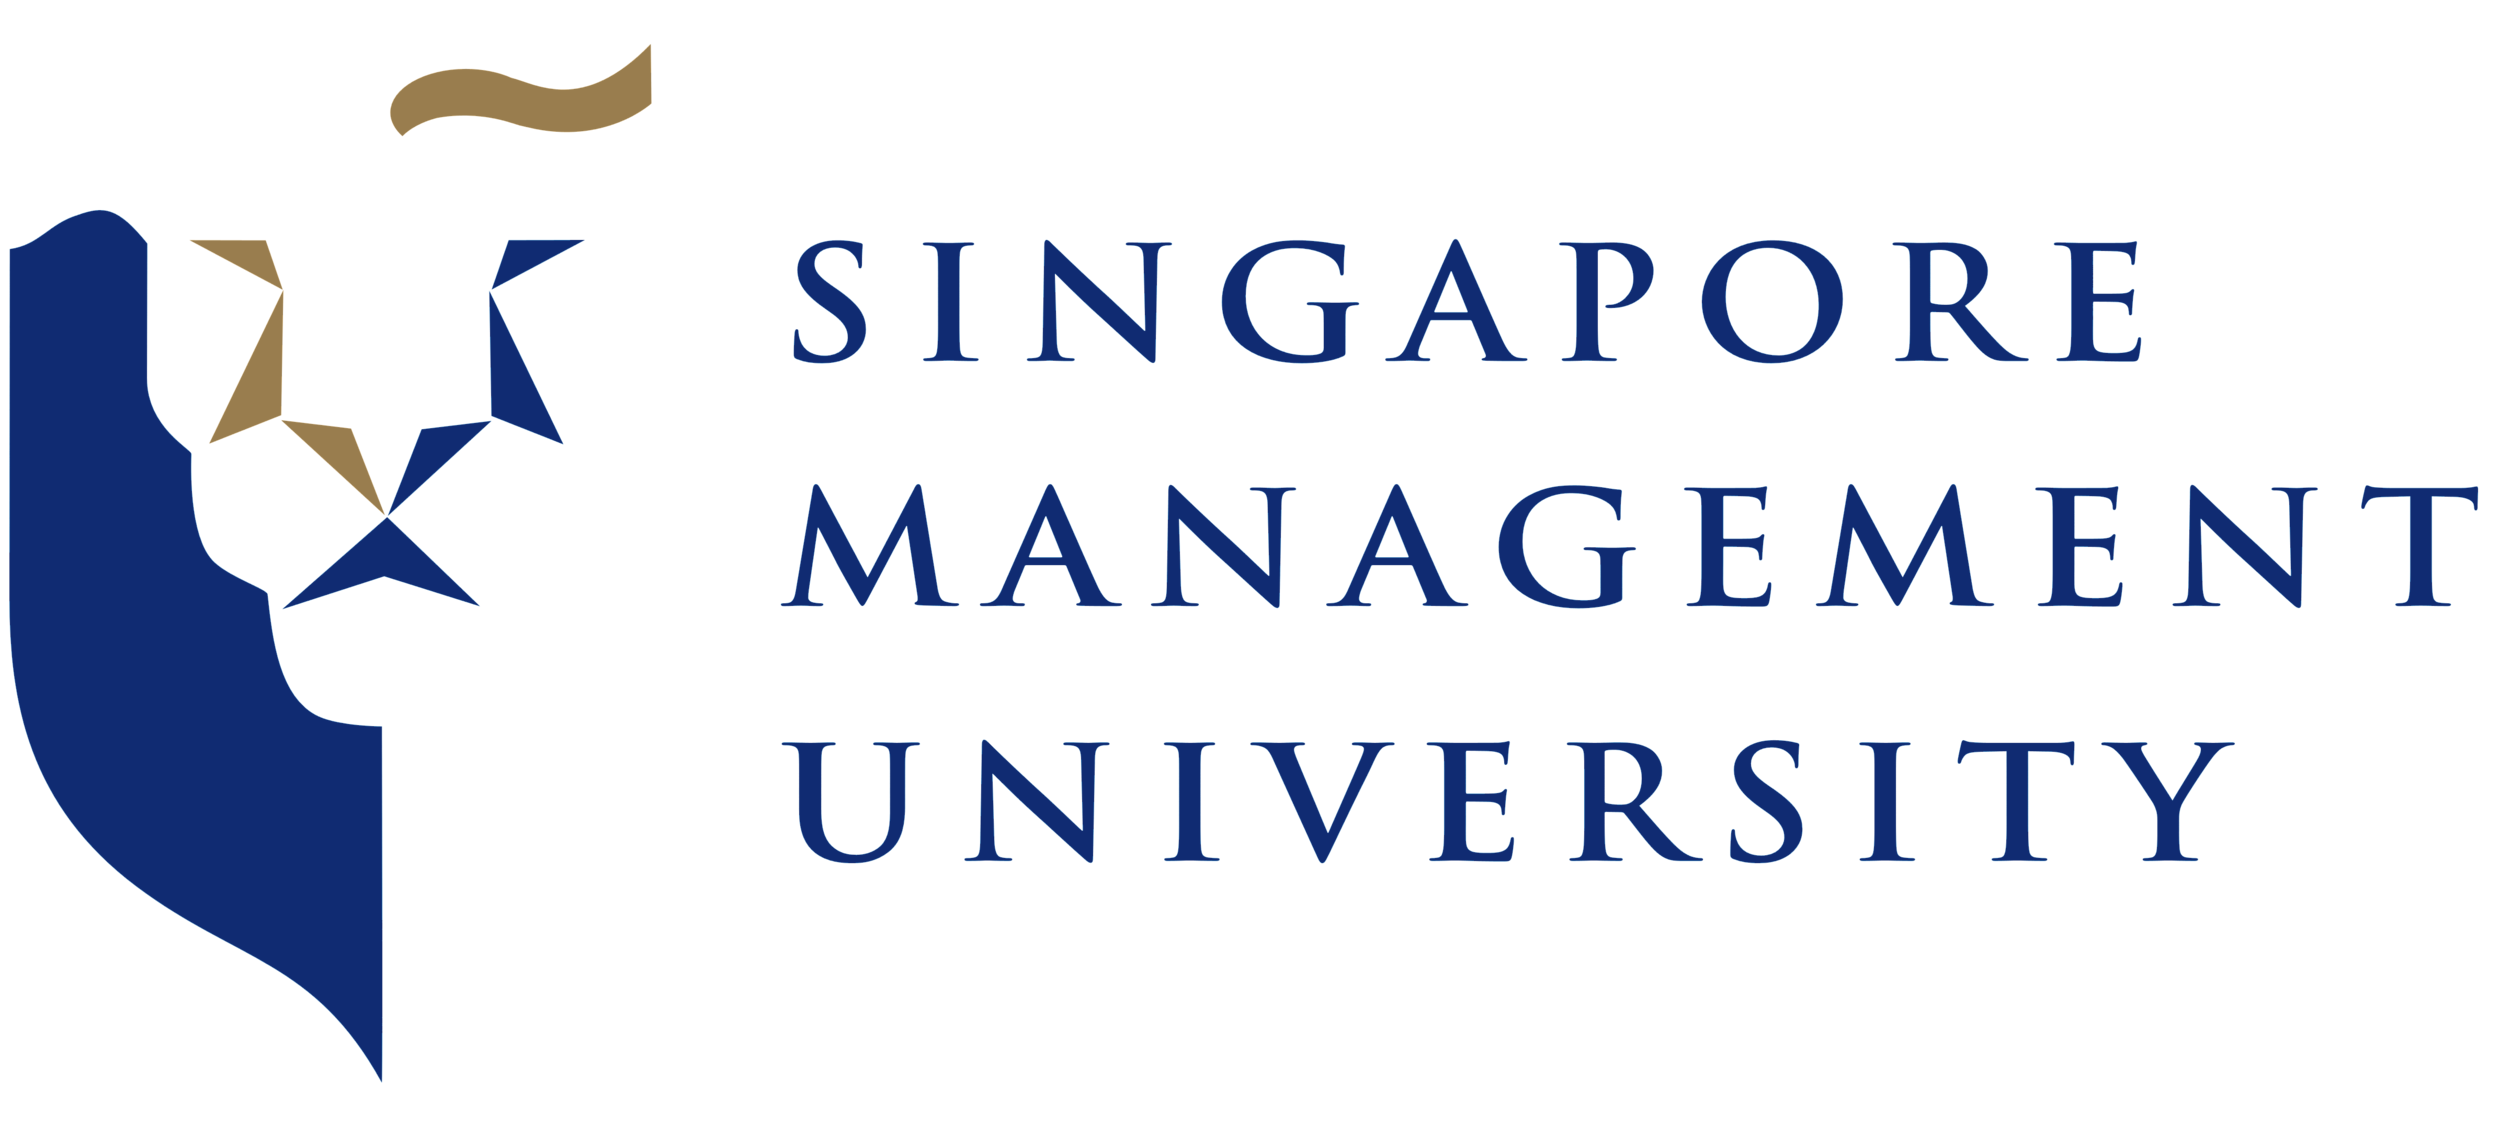 Singapore_Management_University_logo_SMU.png